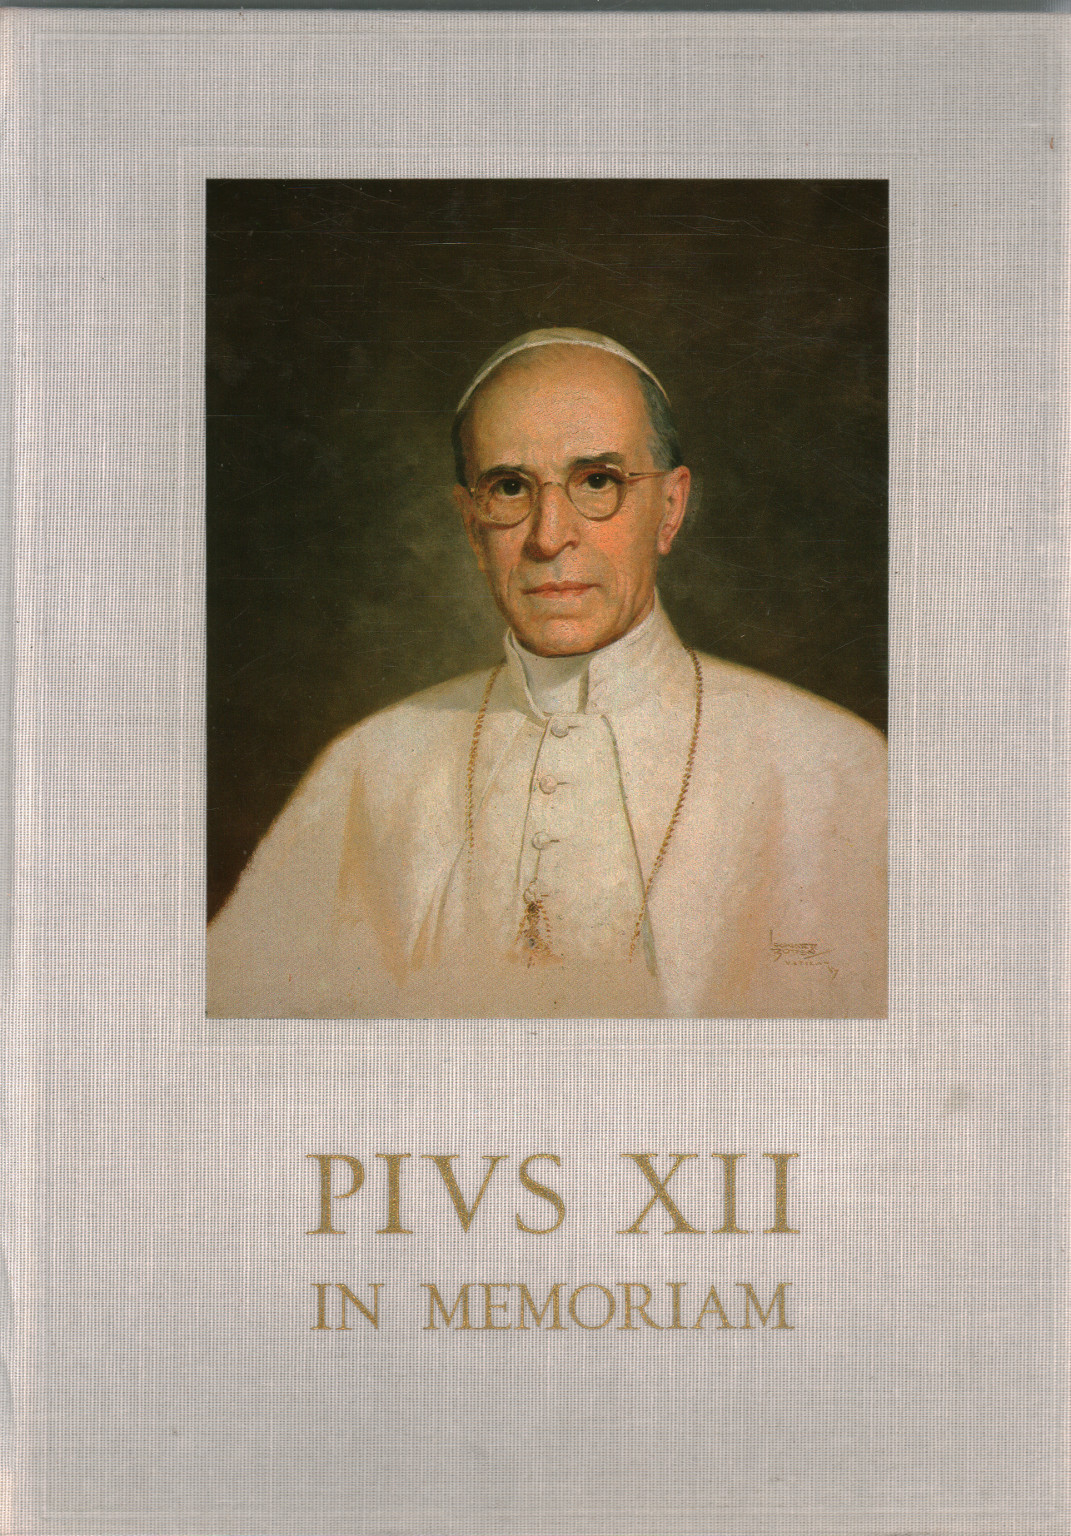 PIVS XII in memoriam, s.a.